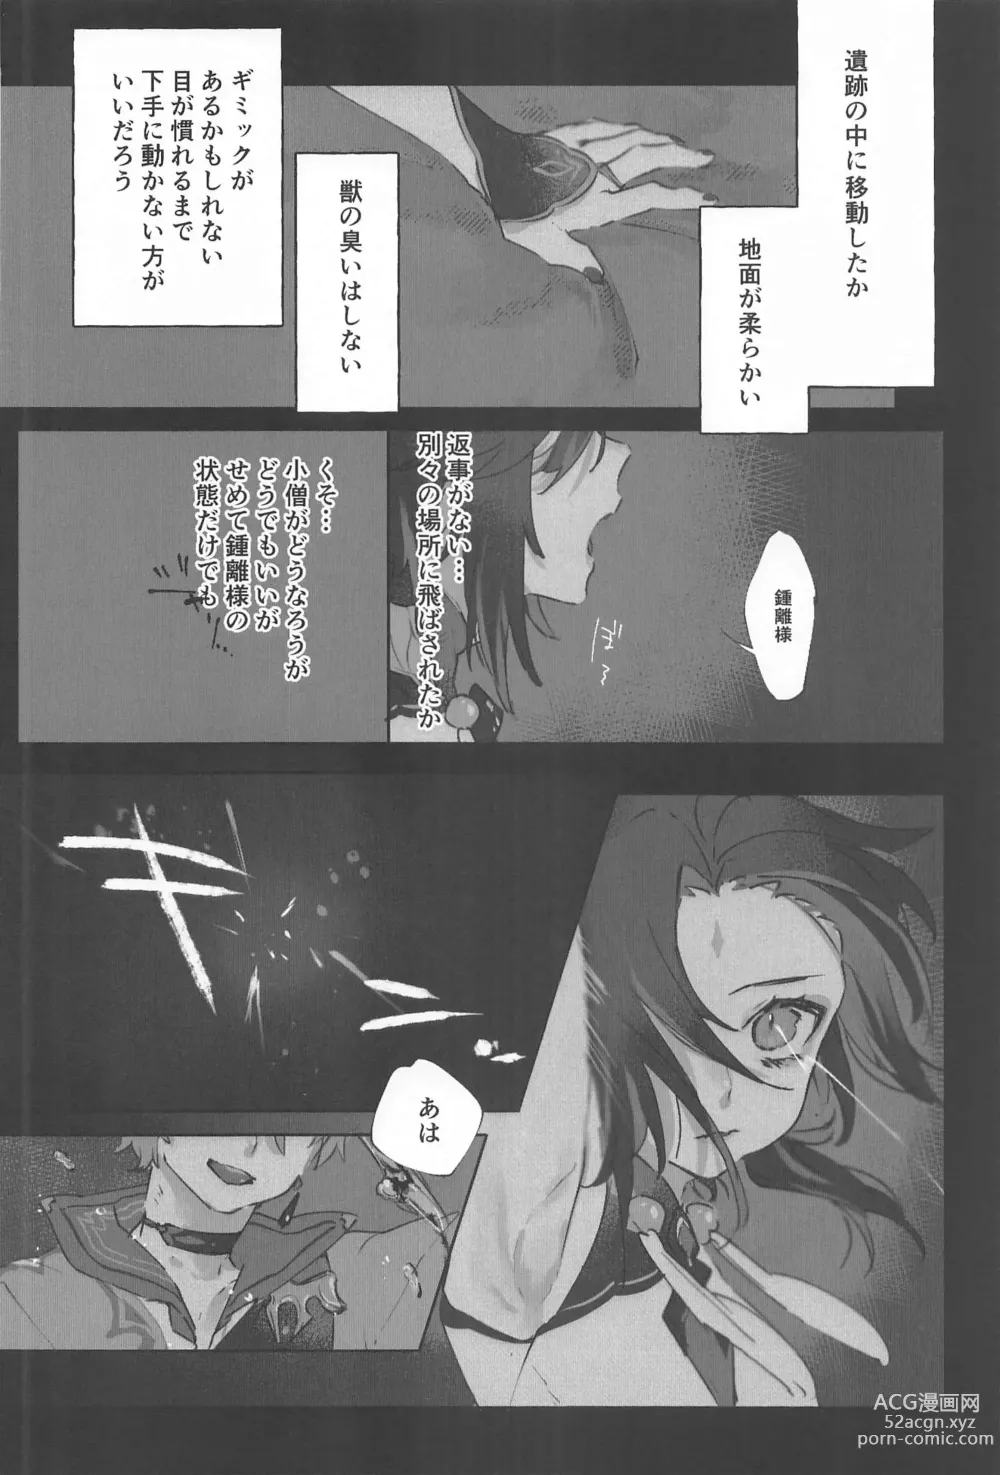 Page 12 of doujinshi Okawari.